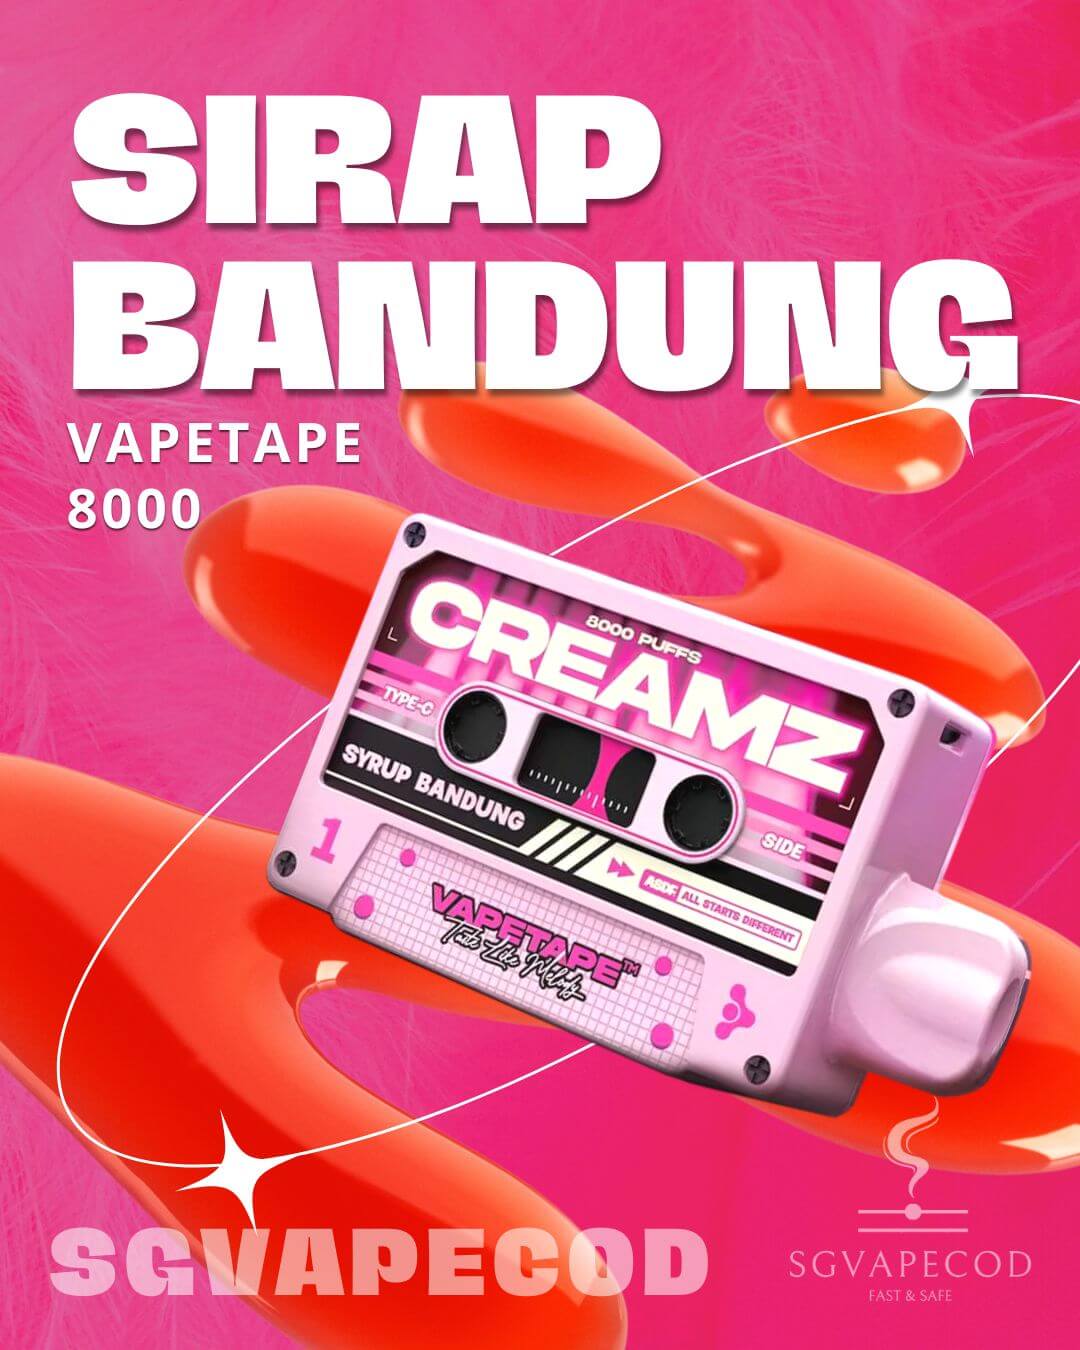 Vapetape-8000-Sirap-Bandung-(SG VAPE COD)